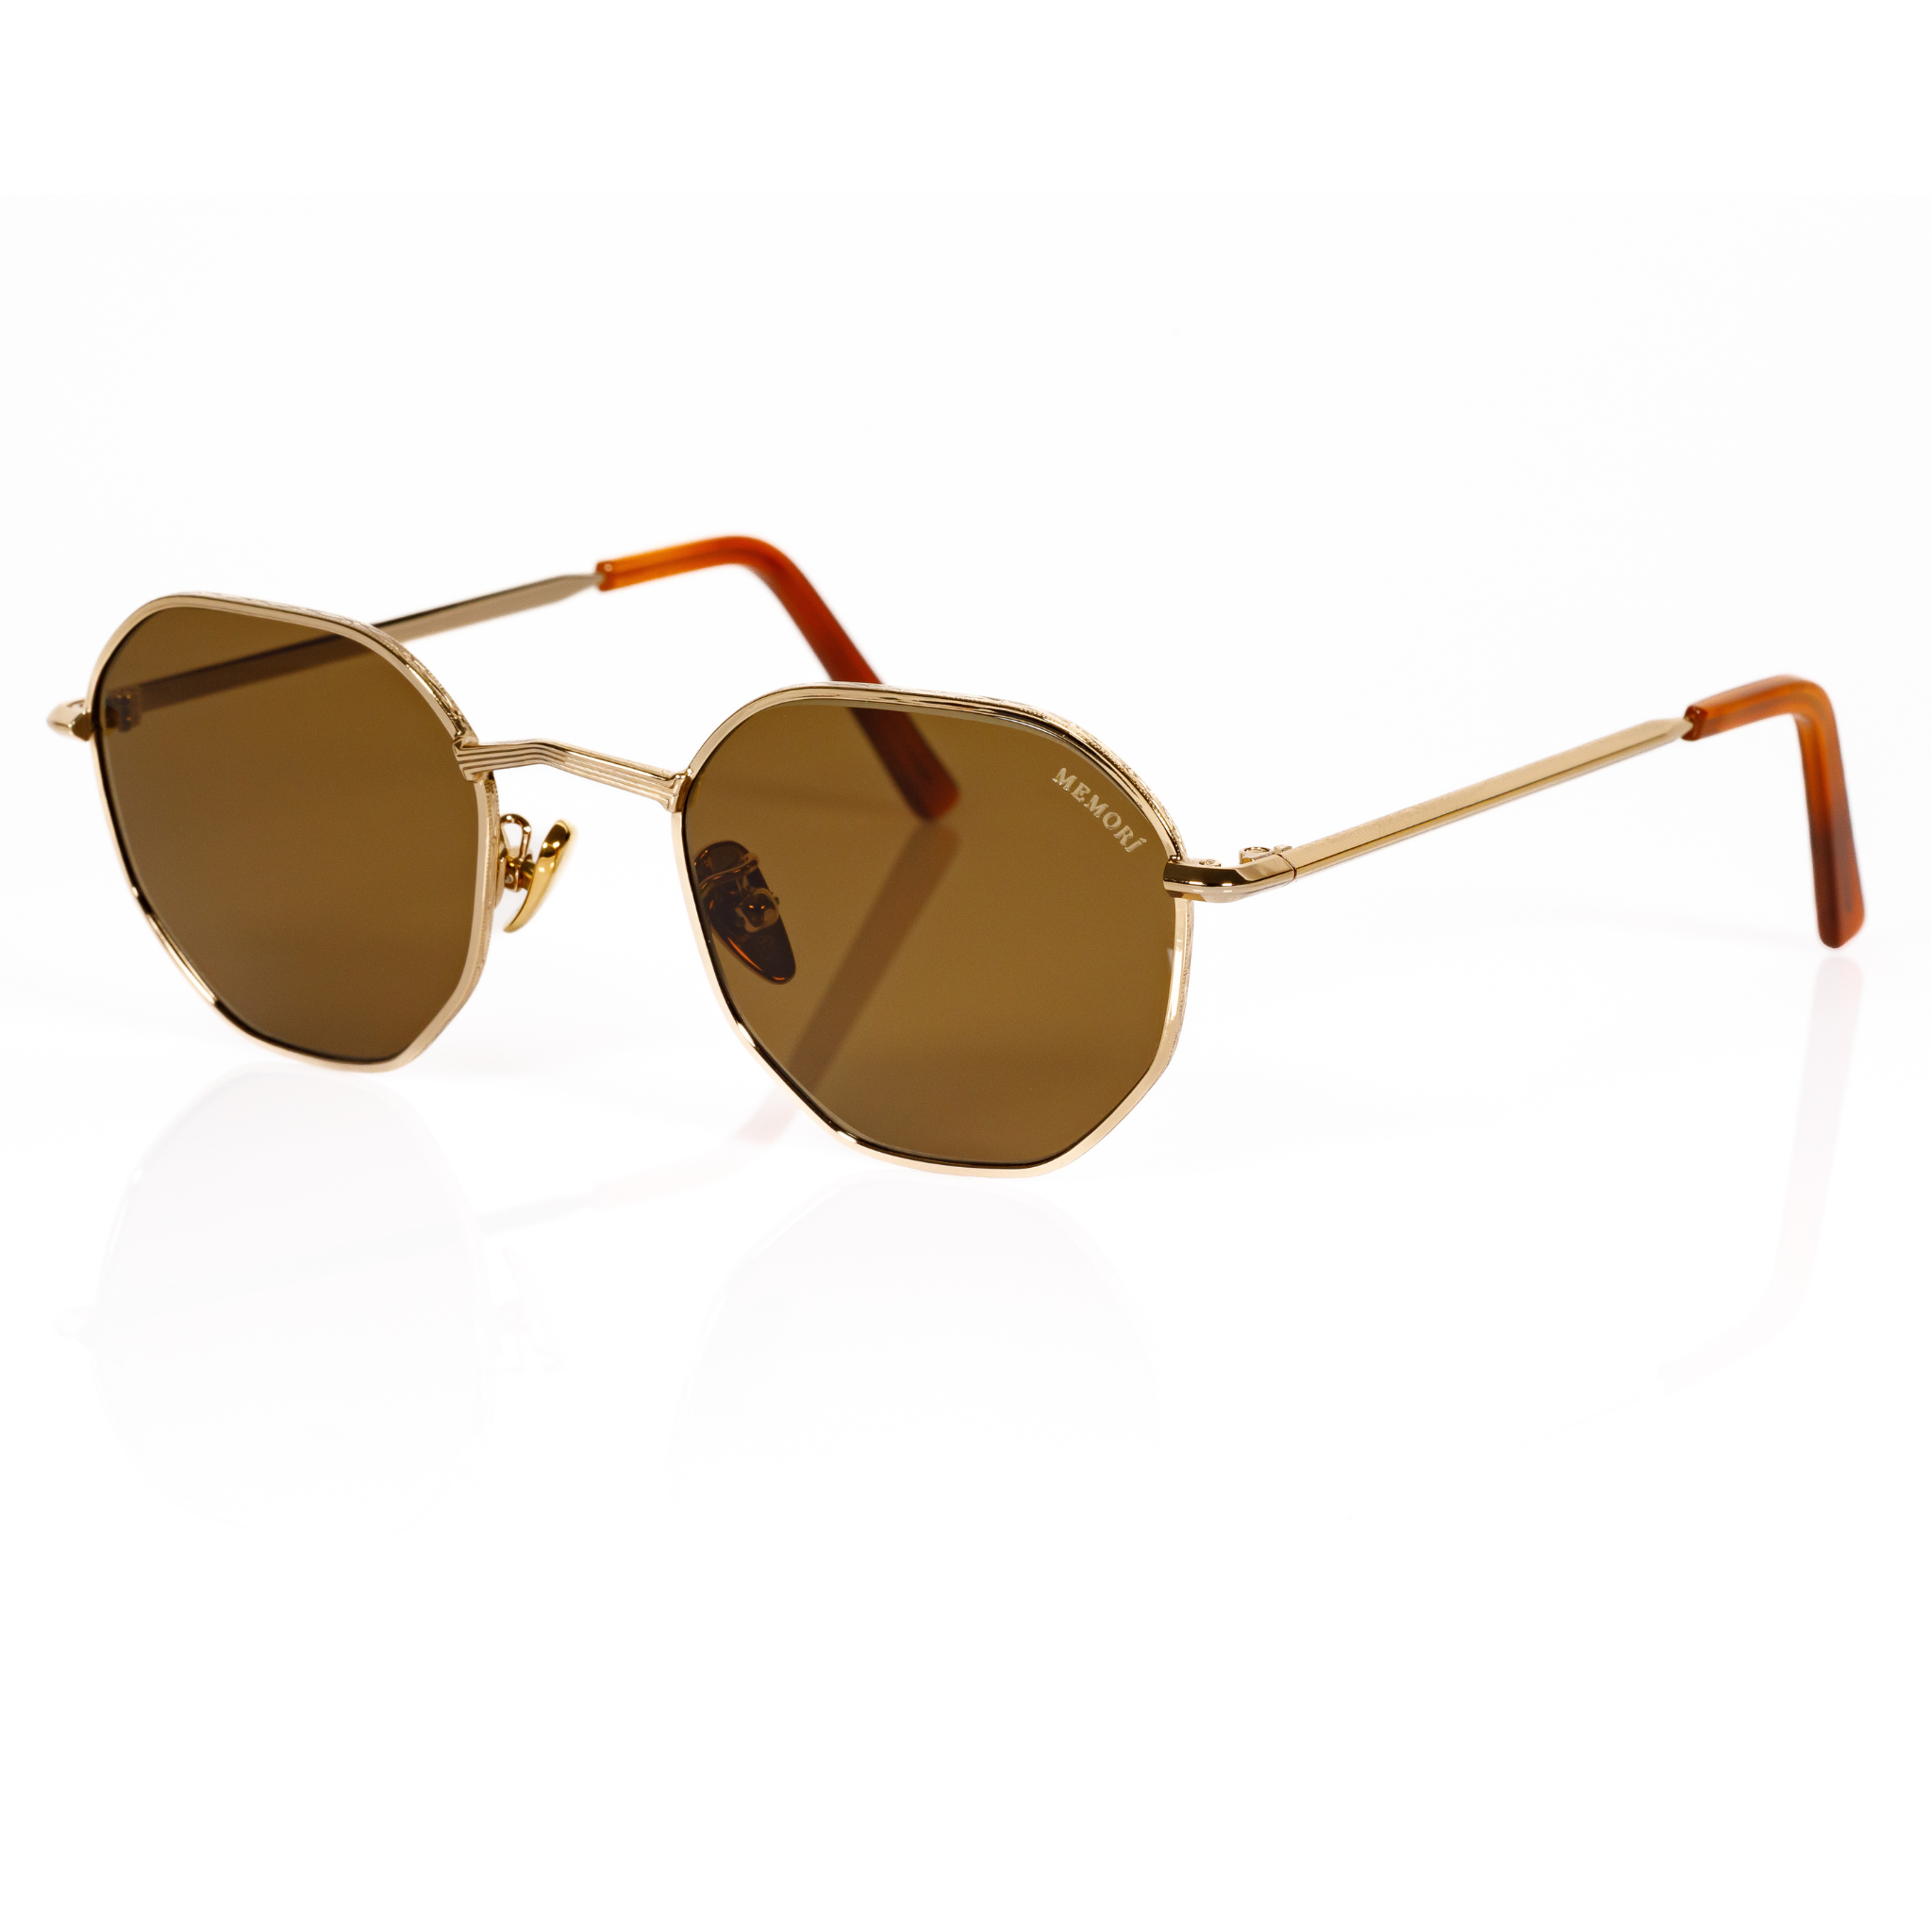 Polarized sunglasses for small faces gold metal unisex, side view showcases V shaped nose bridge design detail and slight hexagonal edge to lens shape